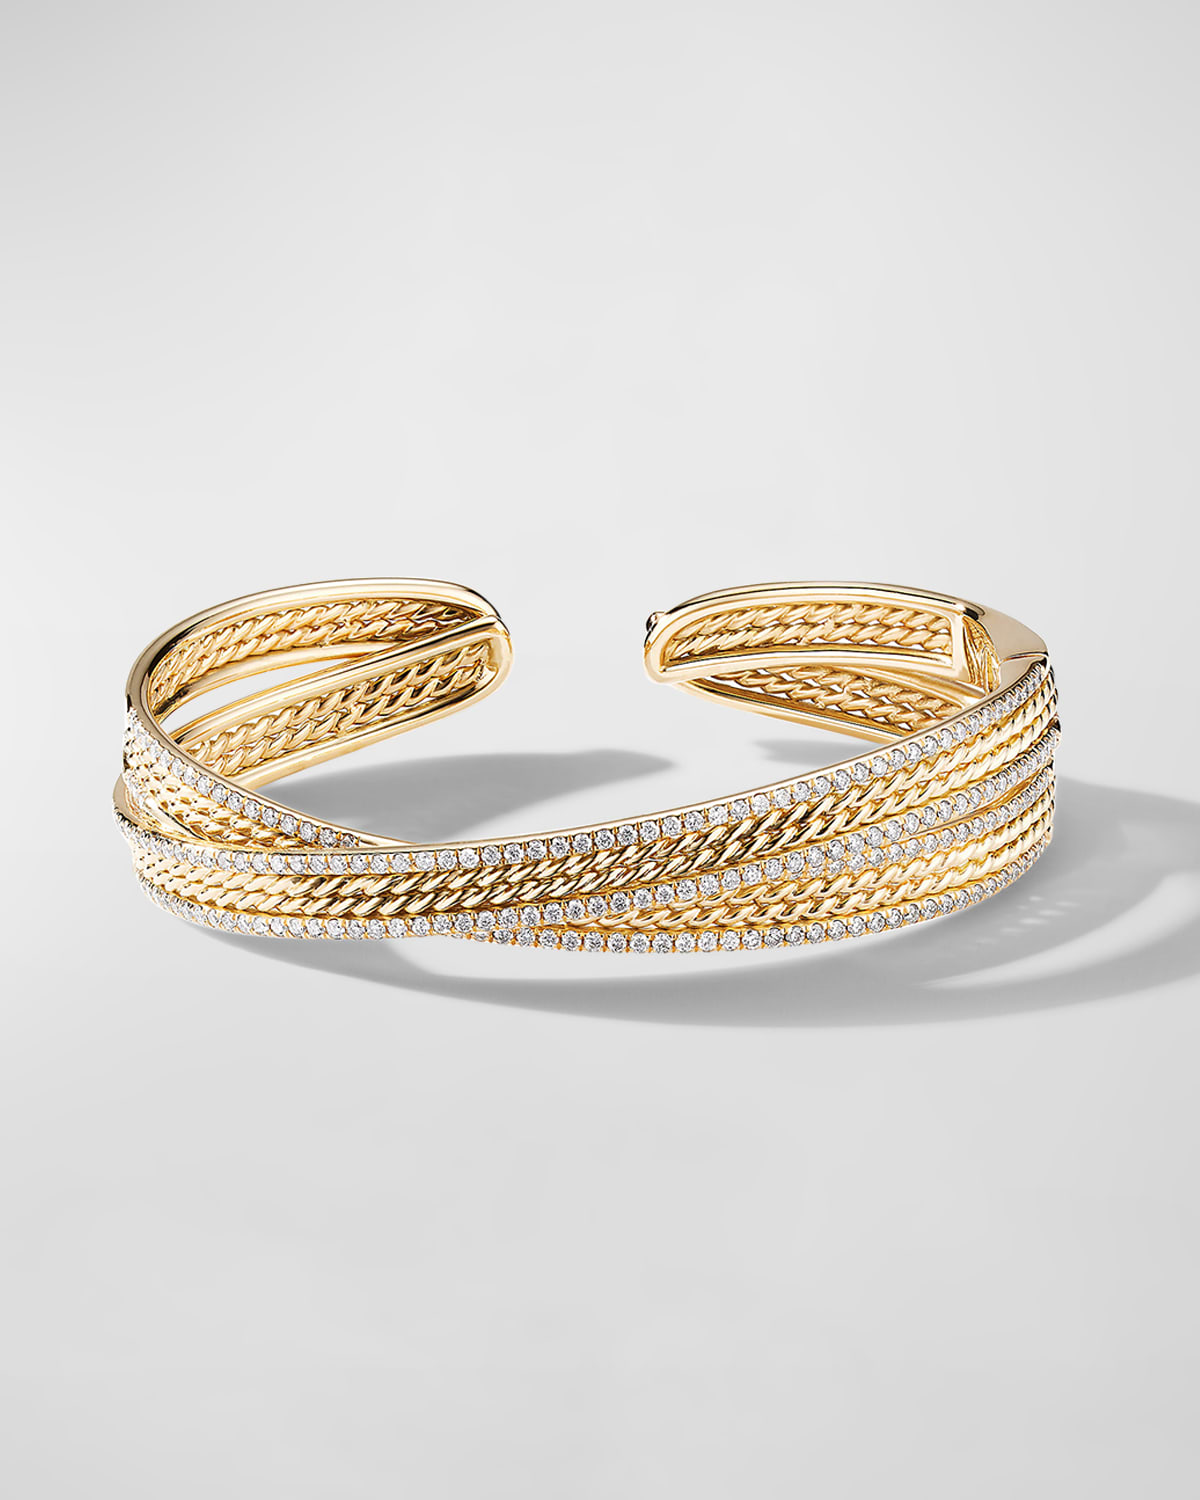 David Yurman Dy Origami Cuff Bracelet With Diamond In 18k Gold, 14mm In 40 White